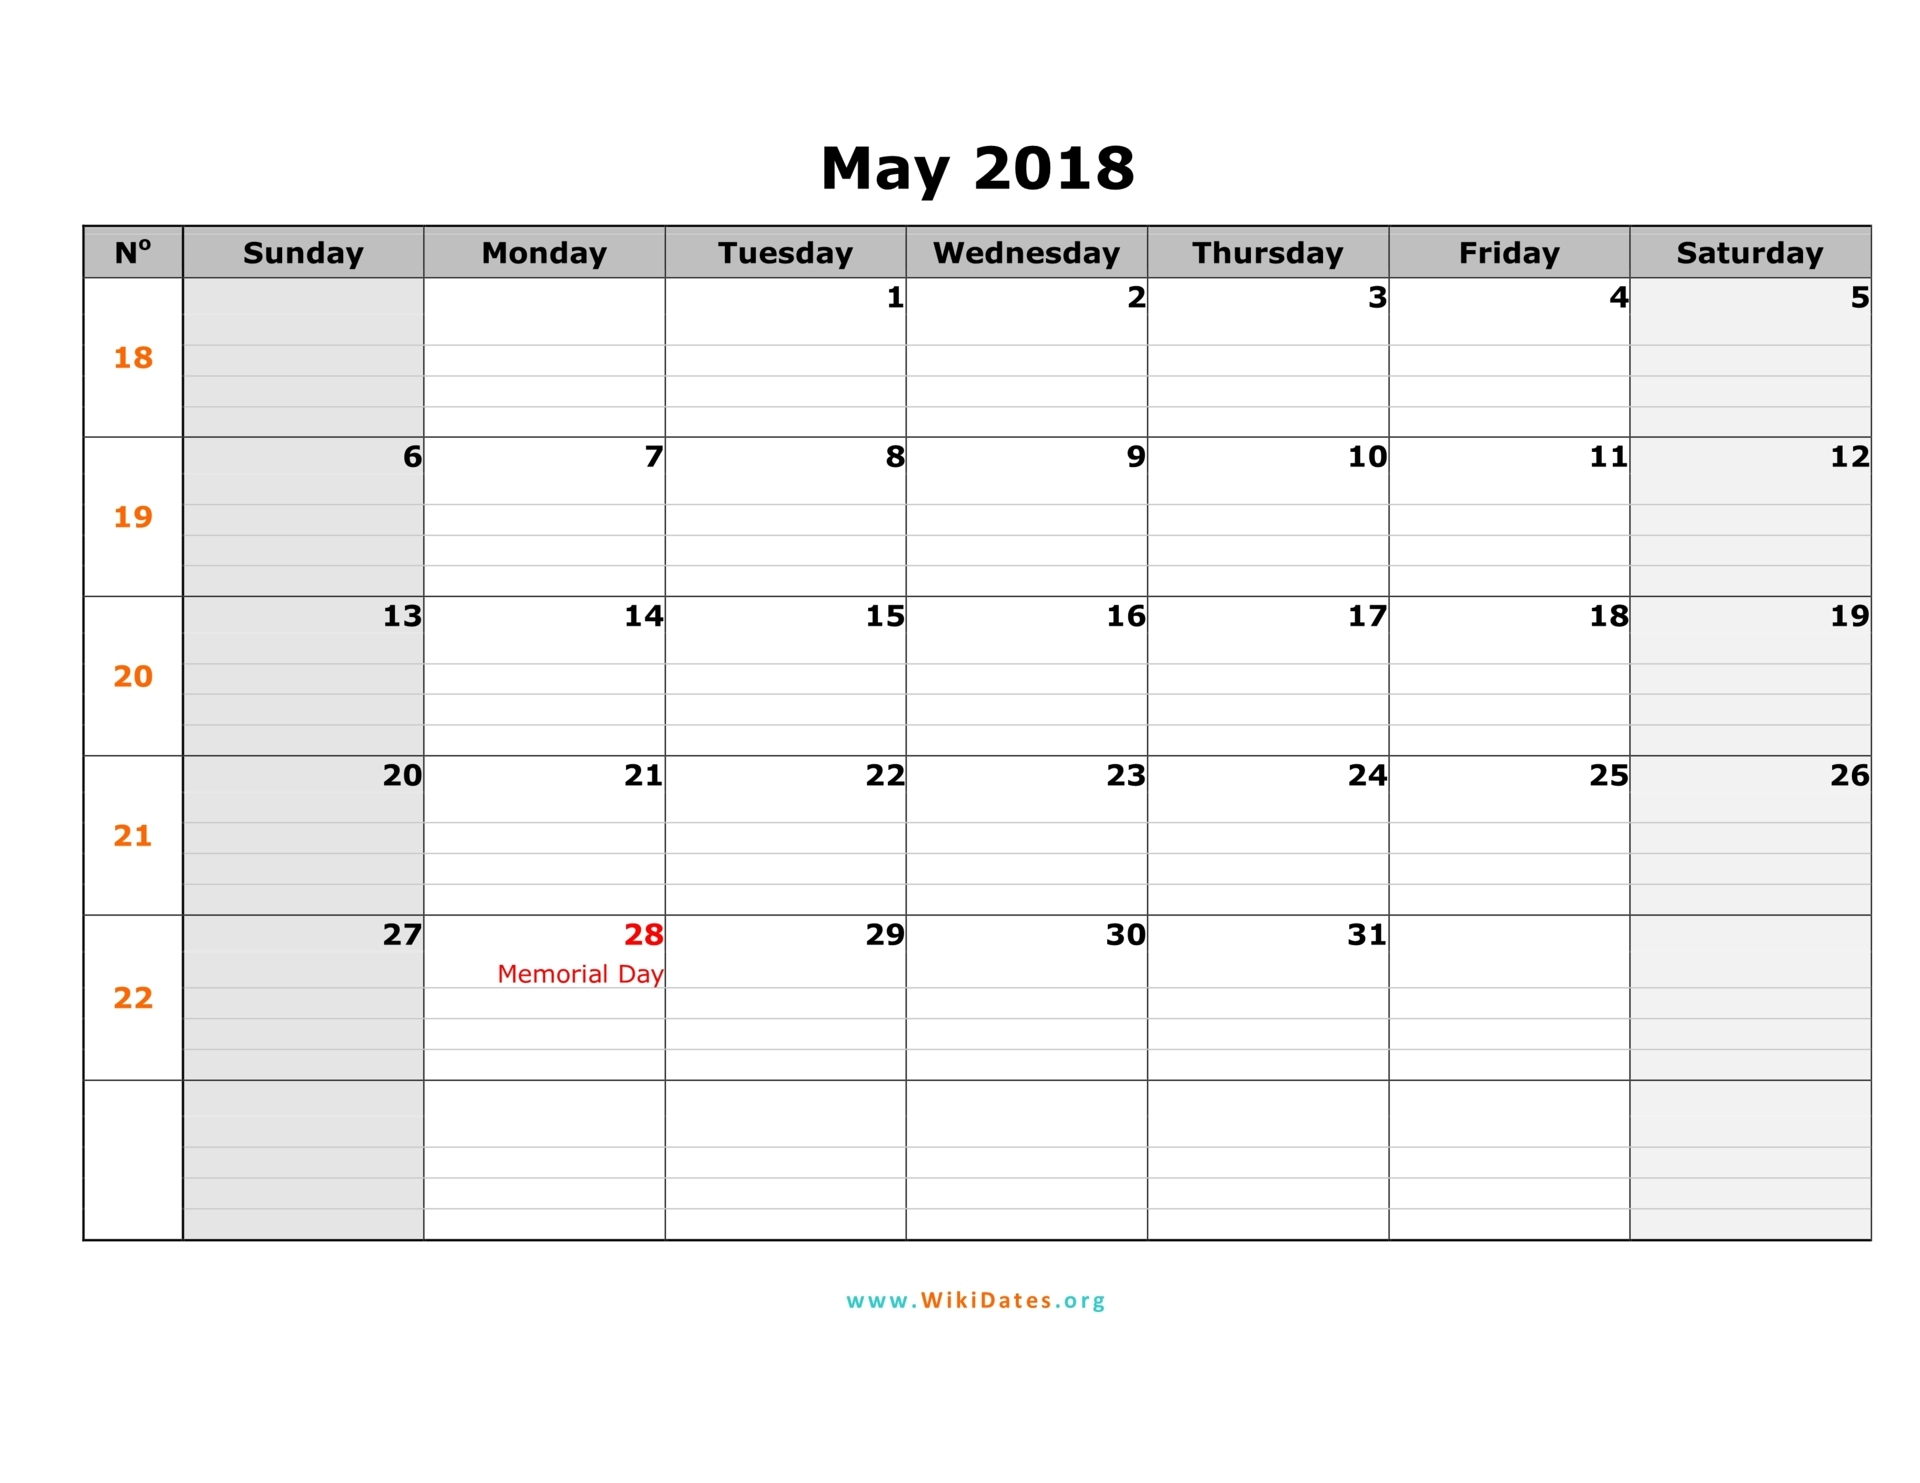 May 2018 Calendar Wikidates